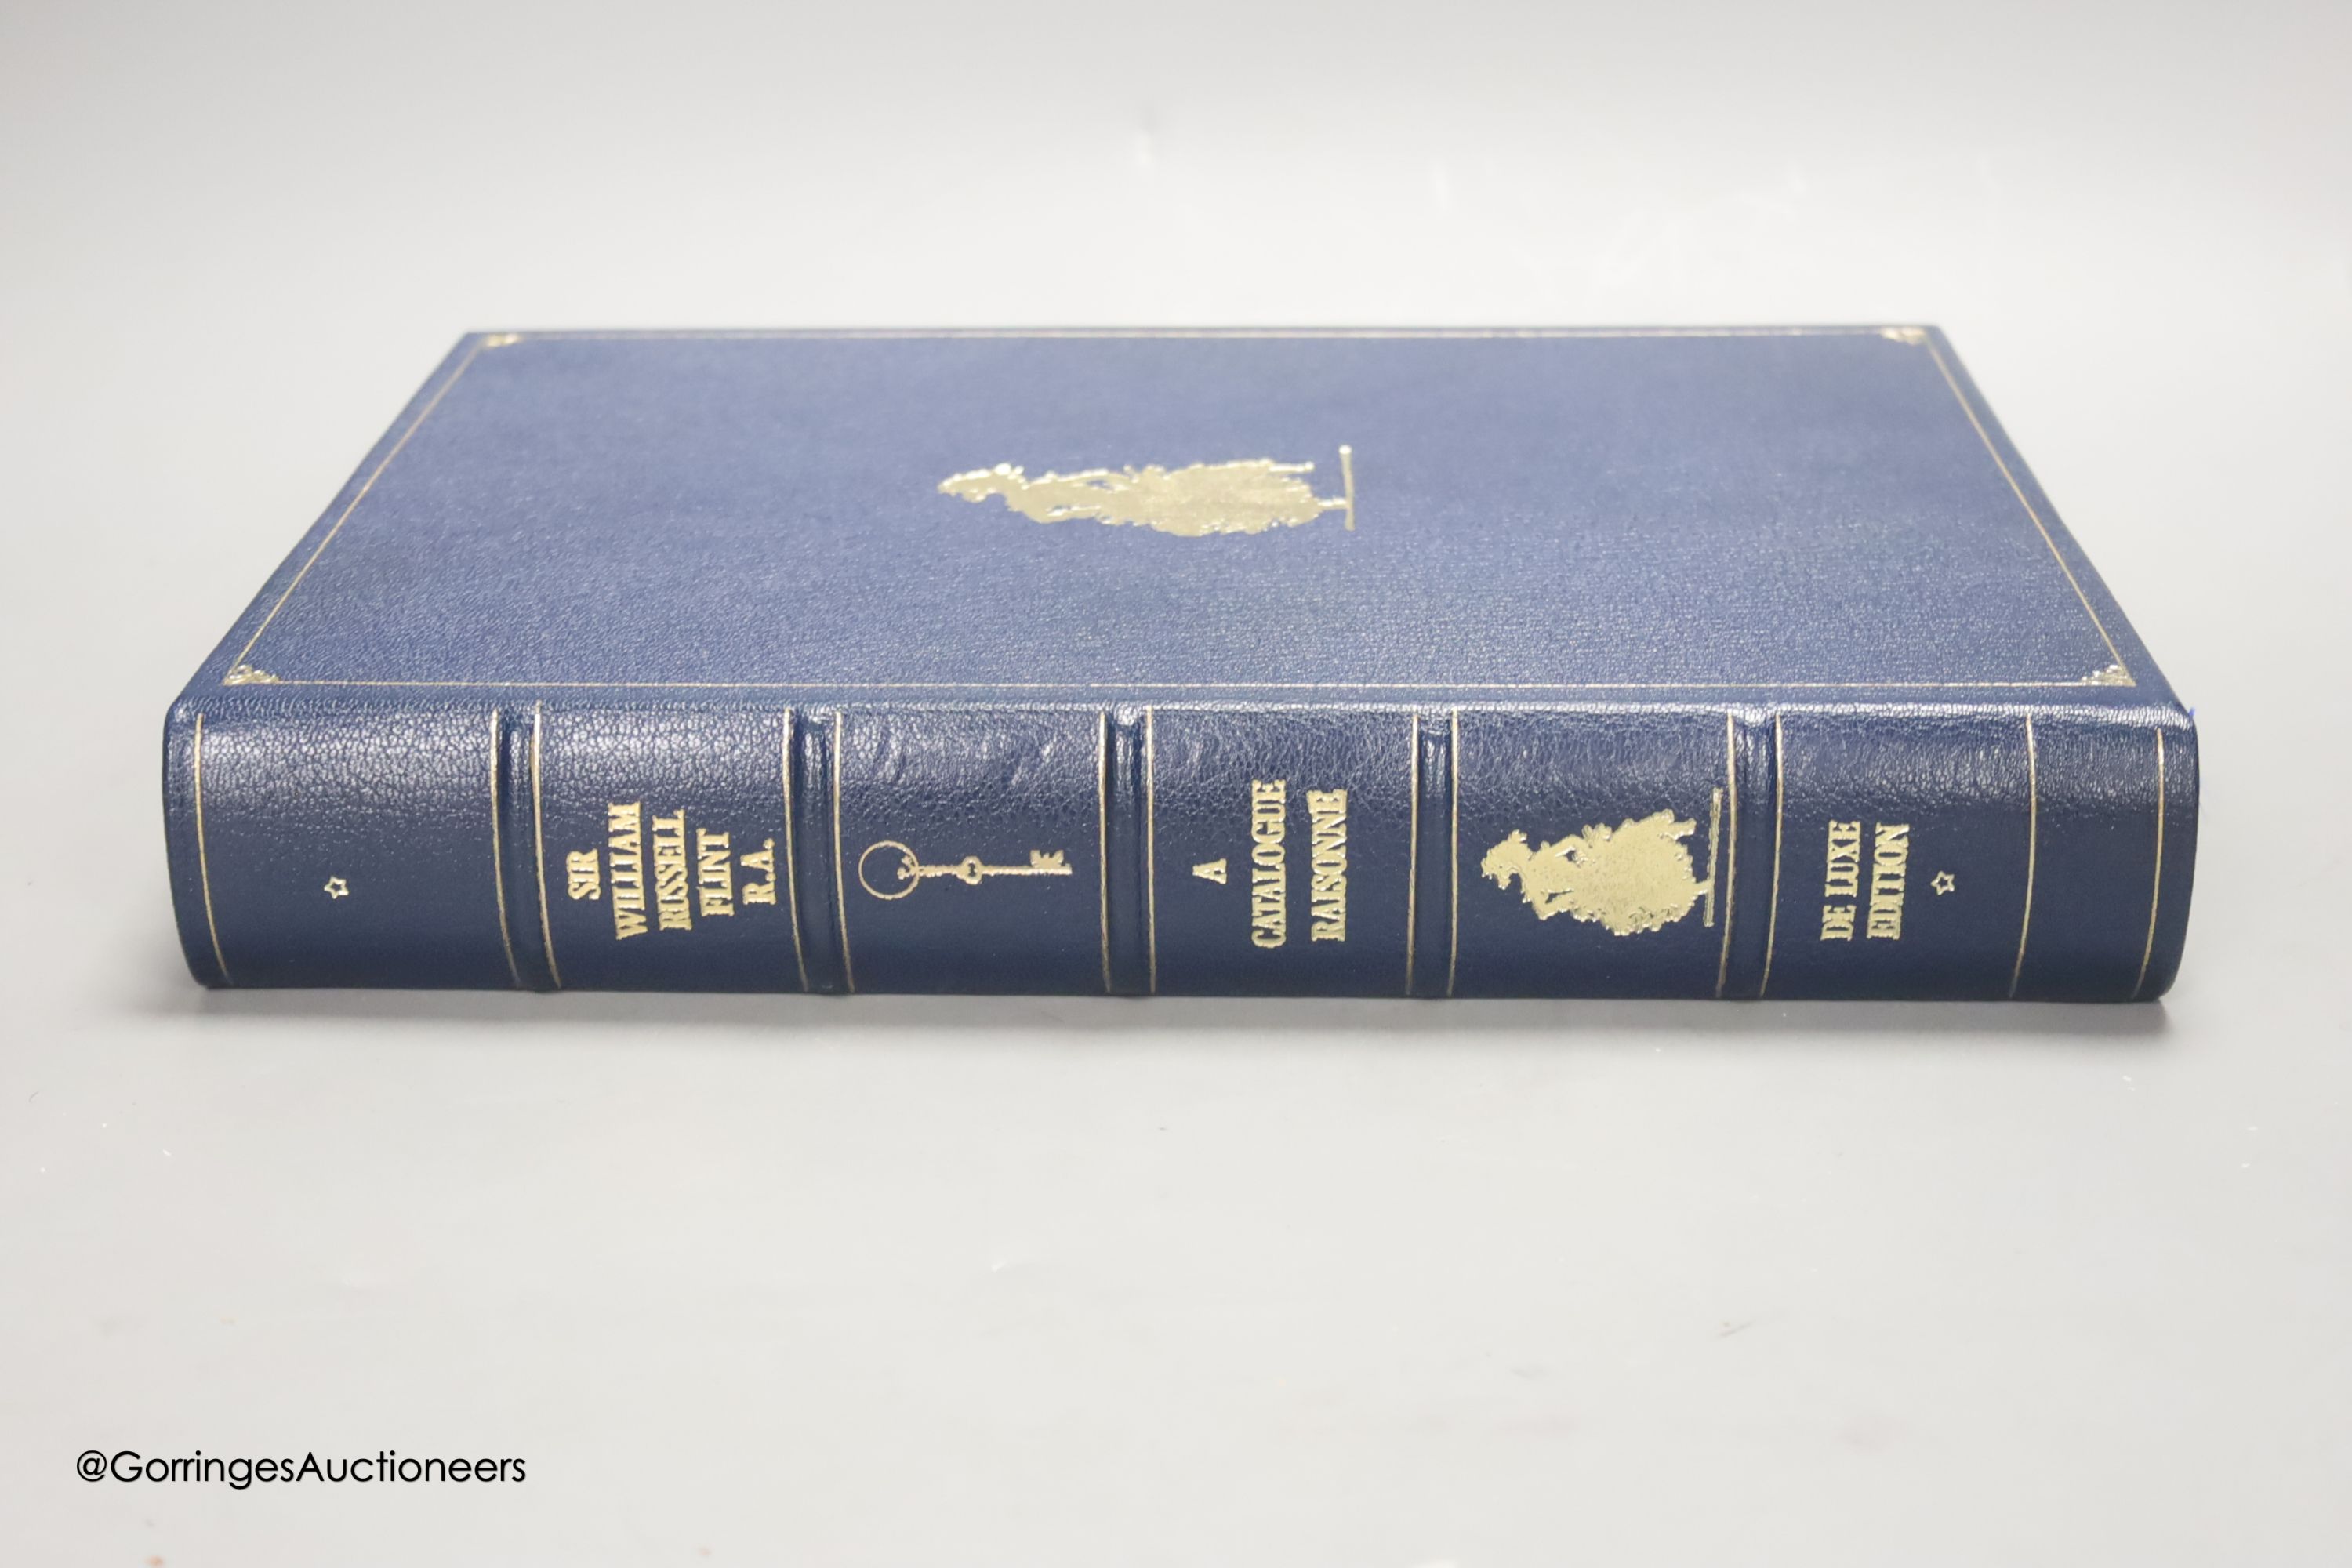 Sir William Russell Flint 'A Catalogue A Rasionne' De Luxe Edition